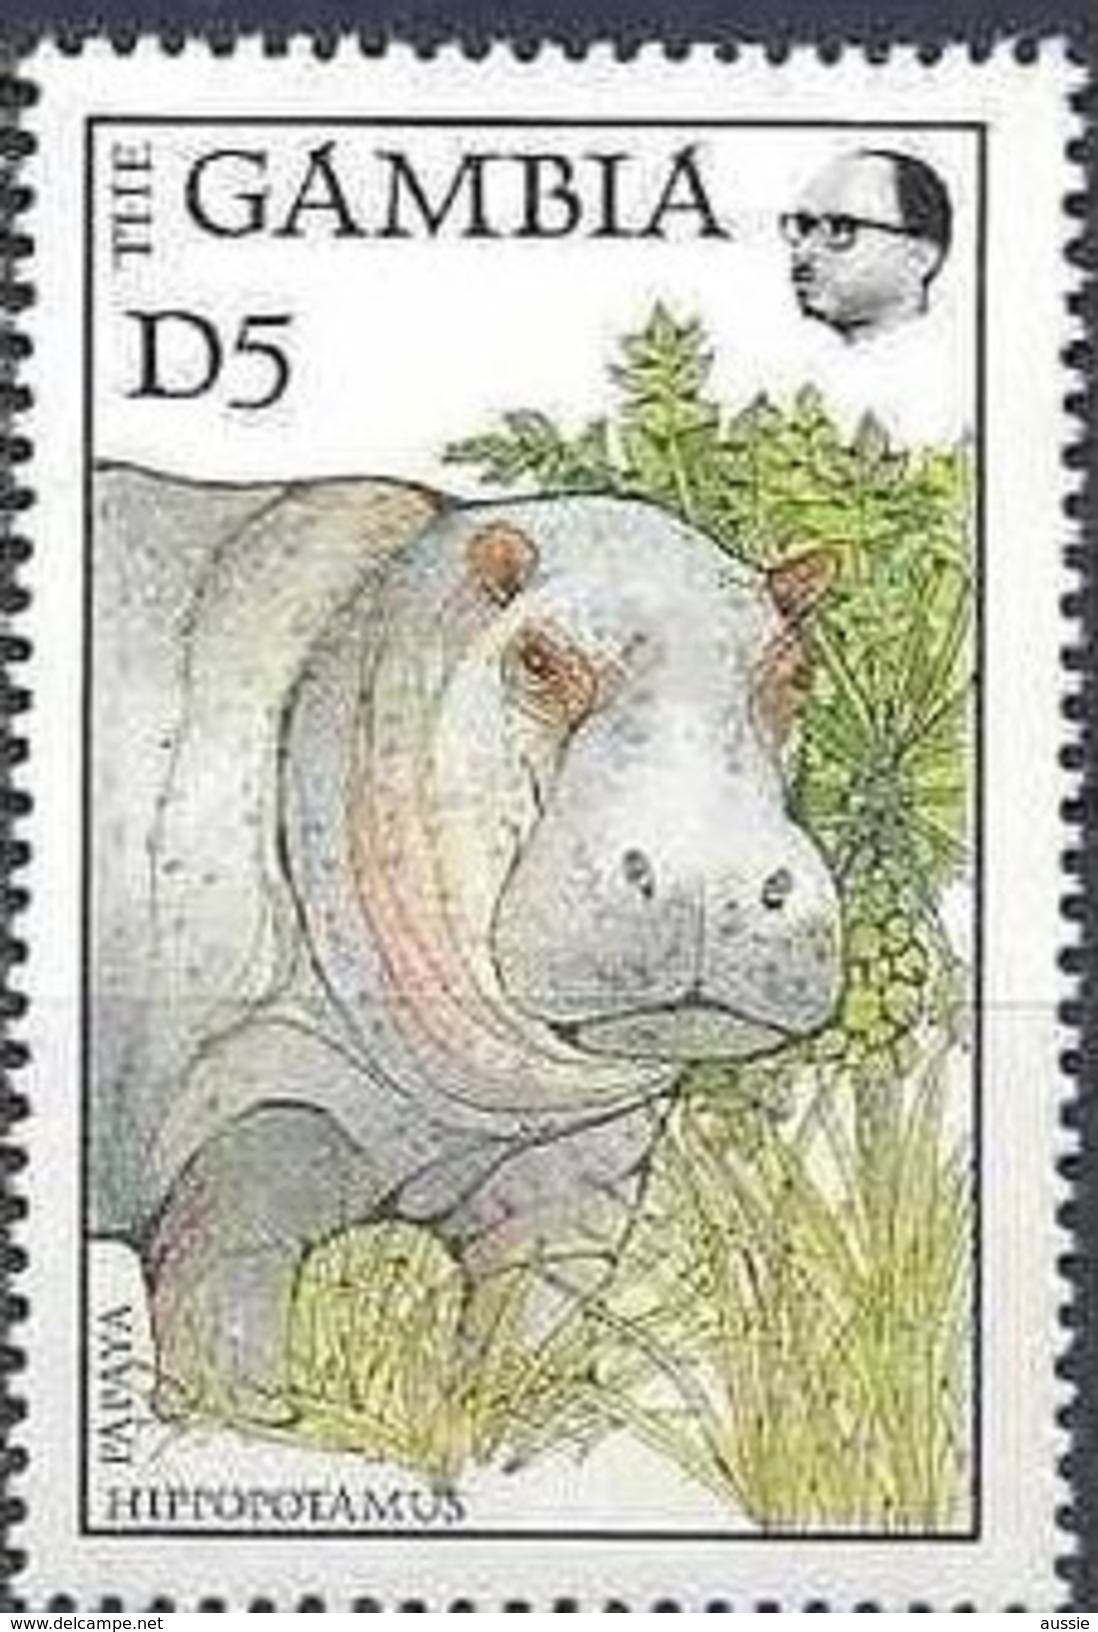 Gambia Gambie 1988 Yvertn° 701 *** MNH Faune Hippopotame Nijlpaard Cote 20 FF - Gambie (1965-...)